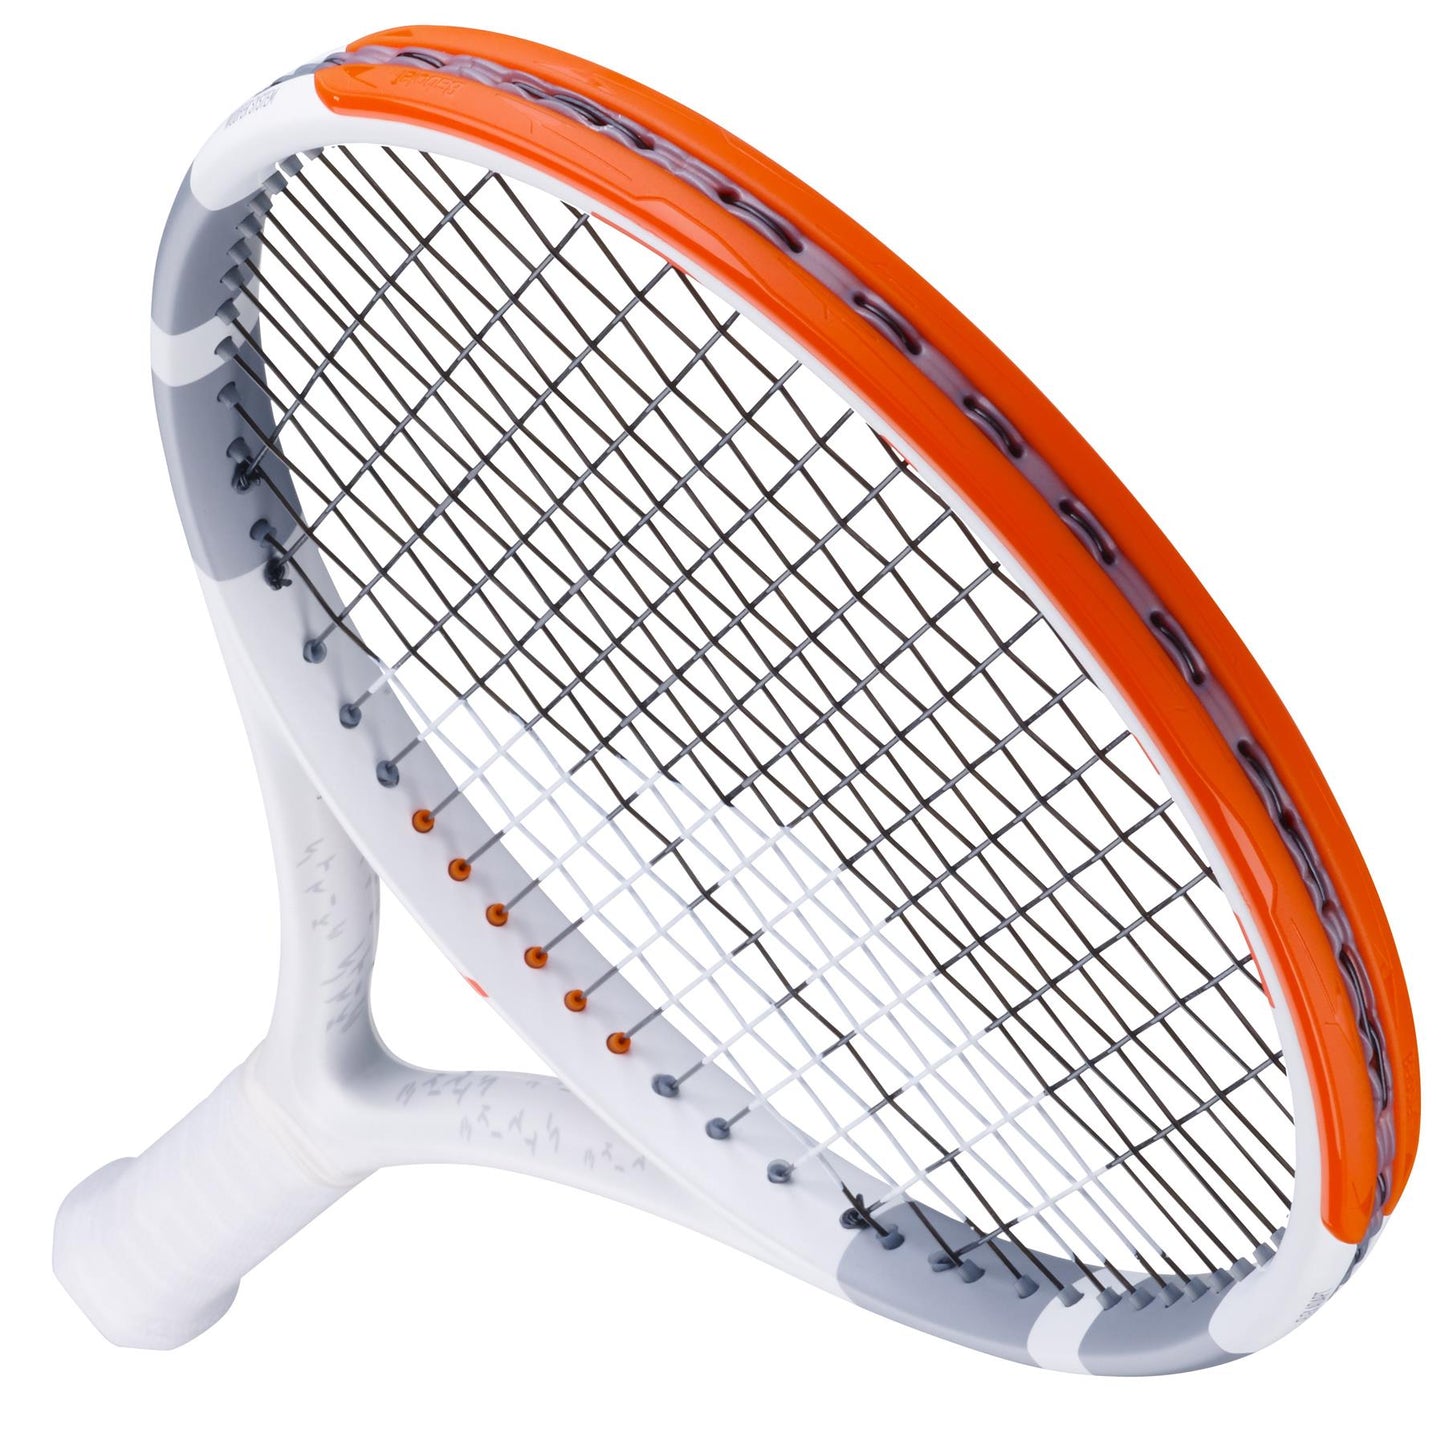 Babolat Evo Strike Gen 2 Tennis Racket - White / Red / Grey (Strung) - Grommets